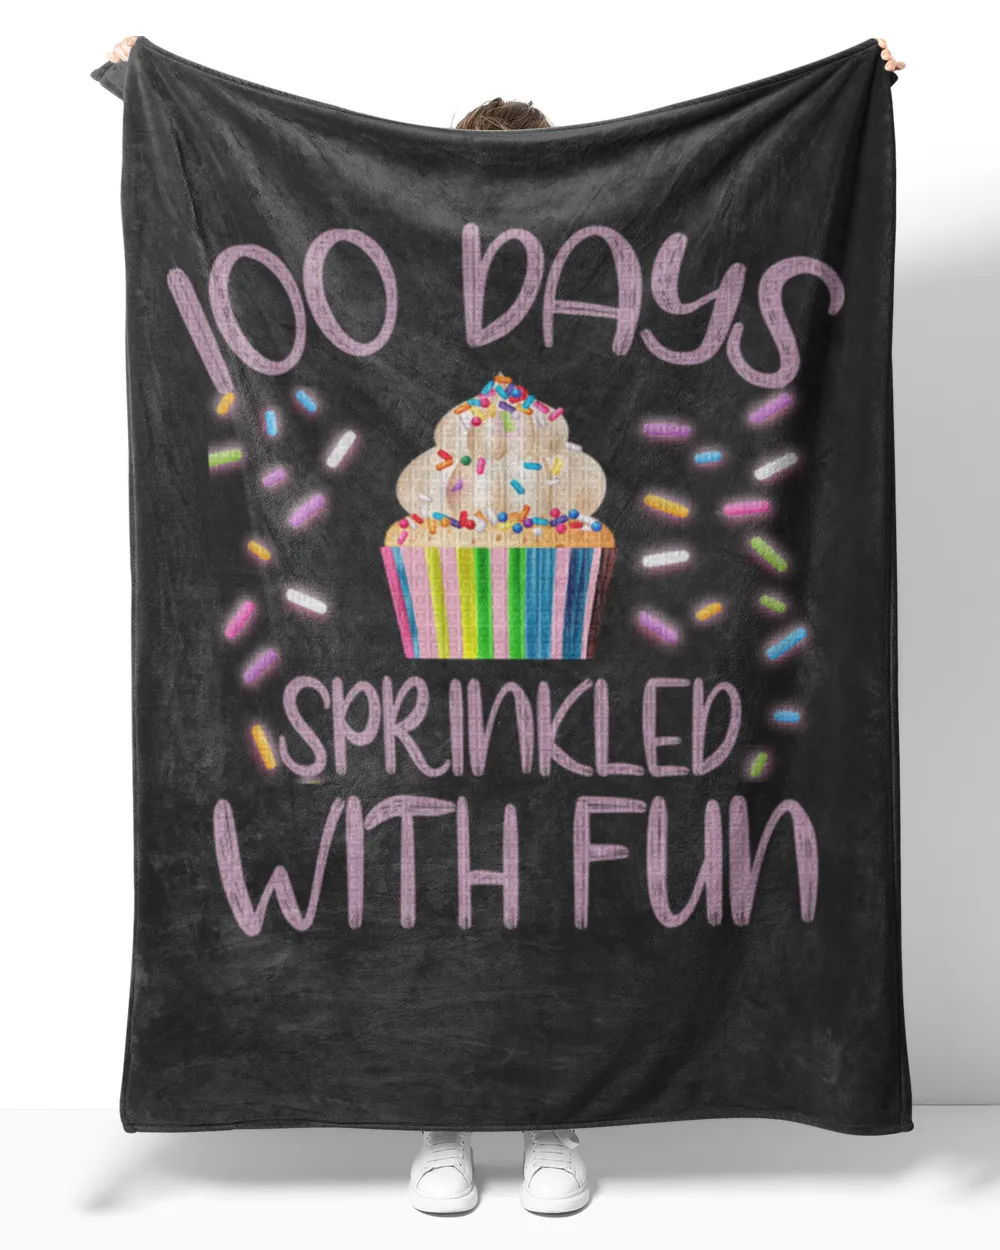 100 Days Of School T-Shirt100 days of school Gift, 100 days sprinkled with fun, student teacher gift idea T-Shirt_by AKACreativity_ copy